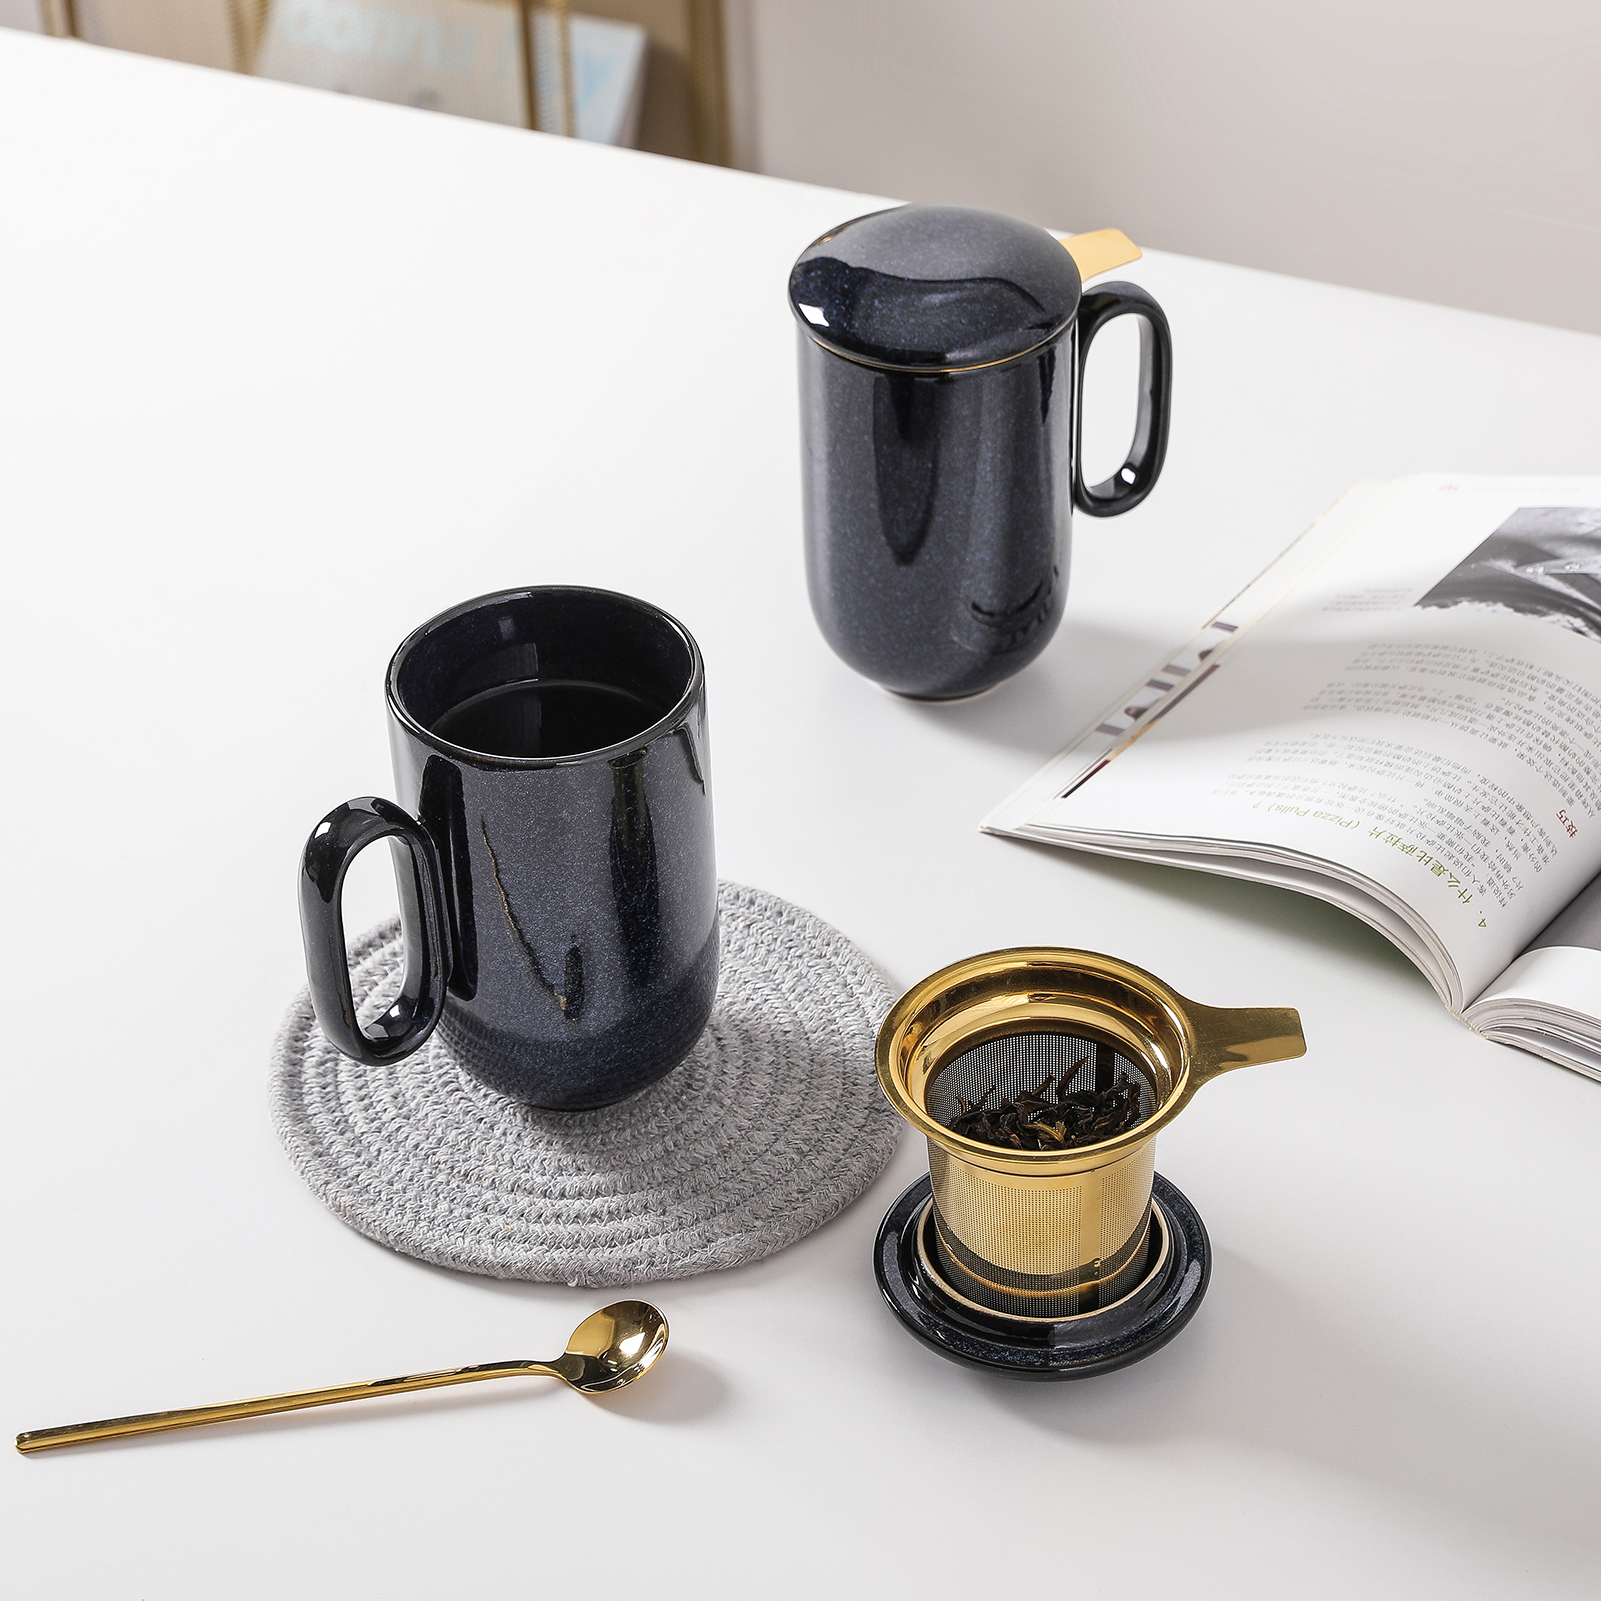 https://www.vicrays.com/wp-content/uploads/2022/07/2-Ceramics-Tea-Cup-with-Infuser.jpg